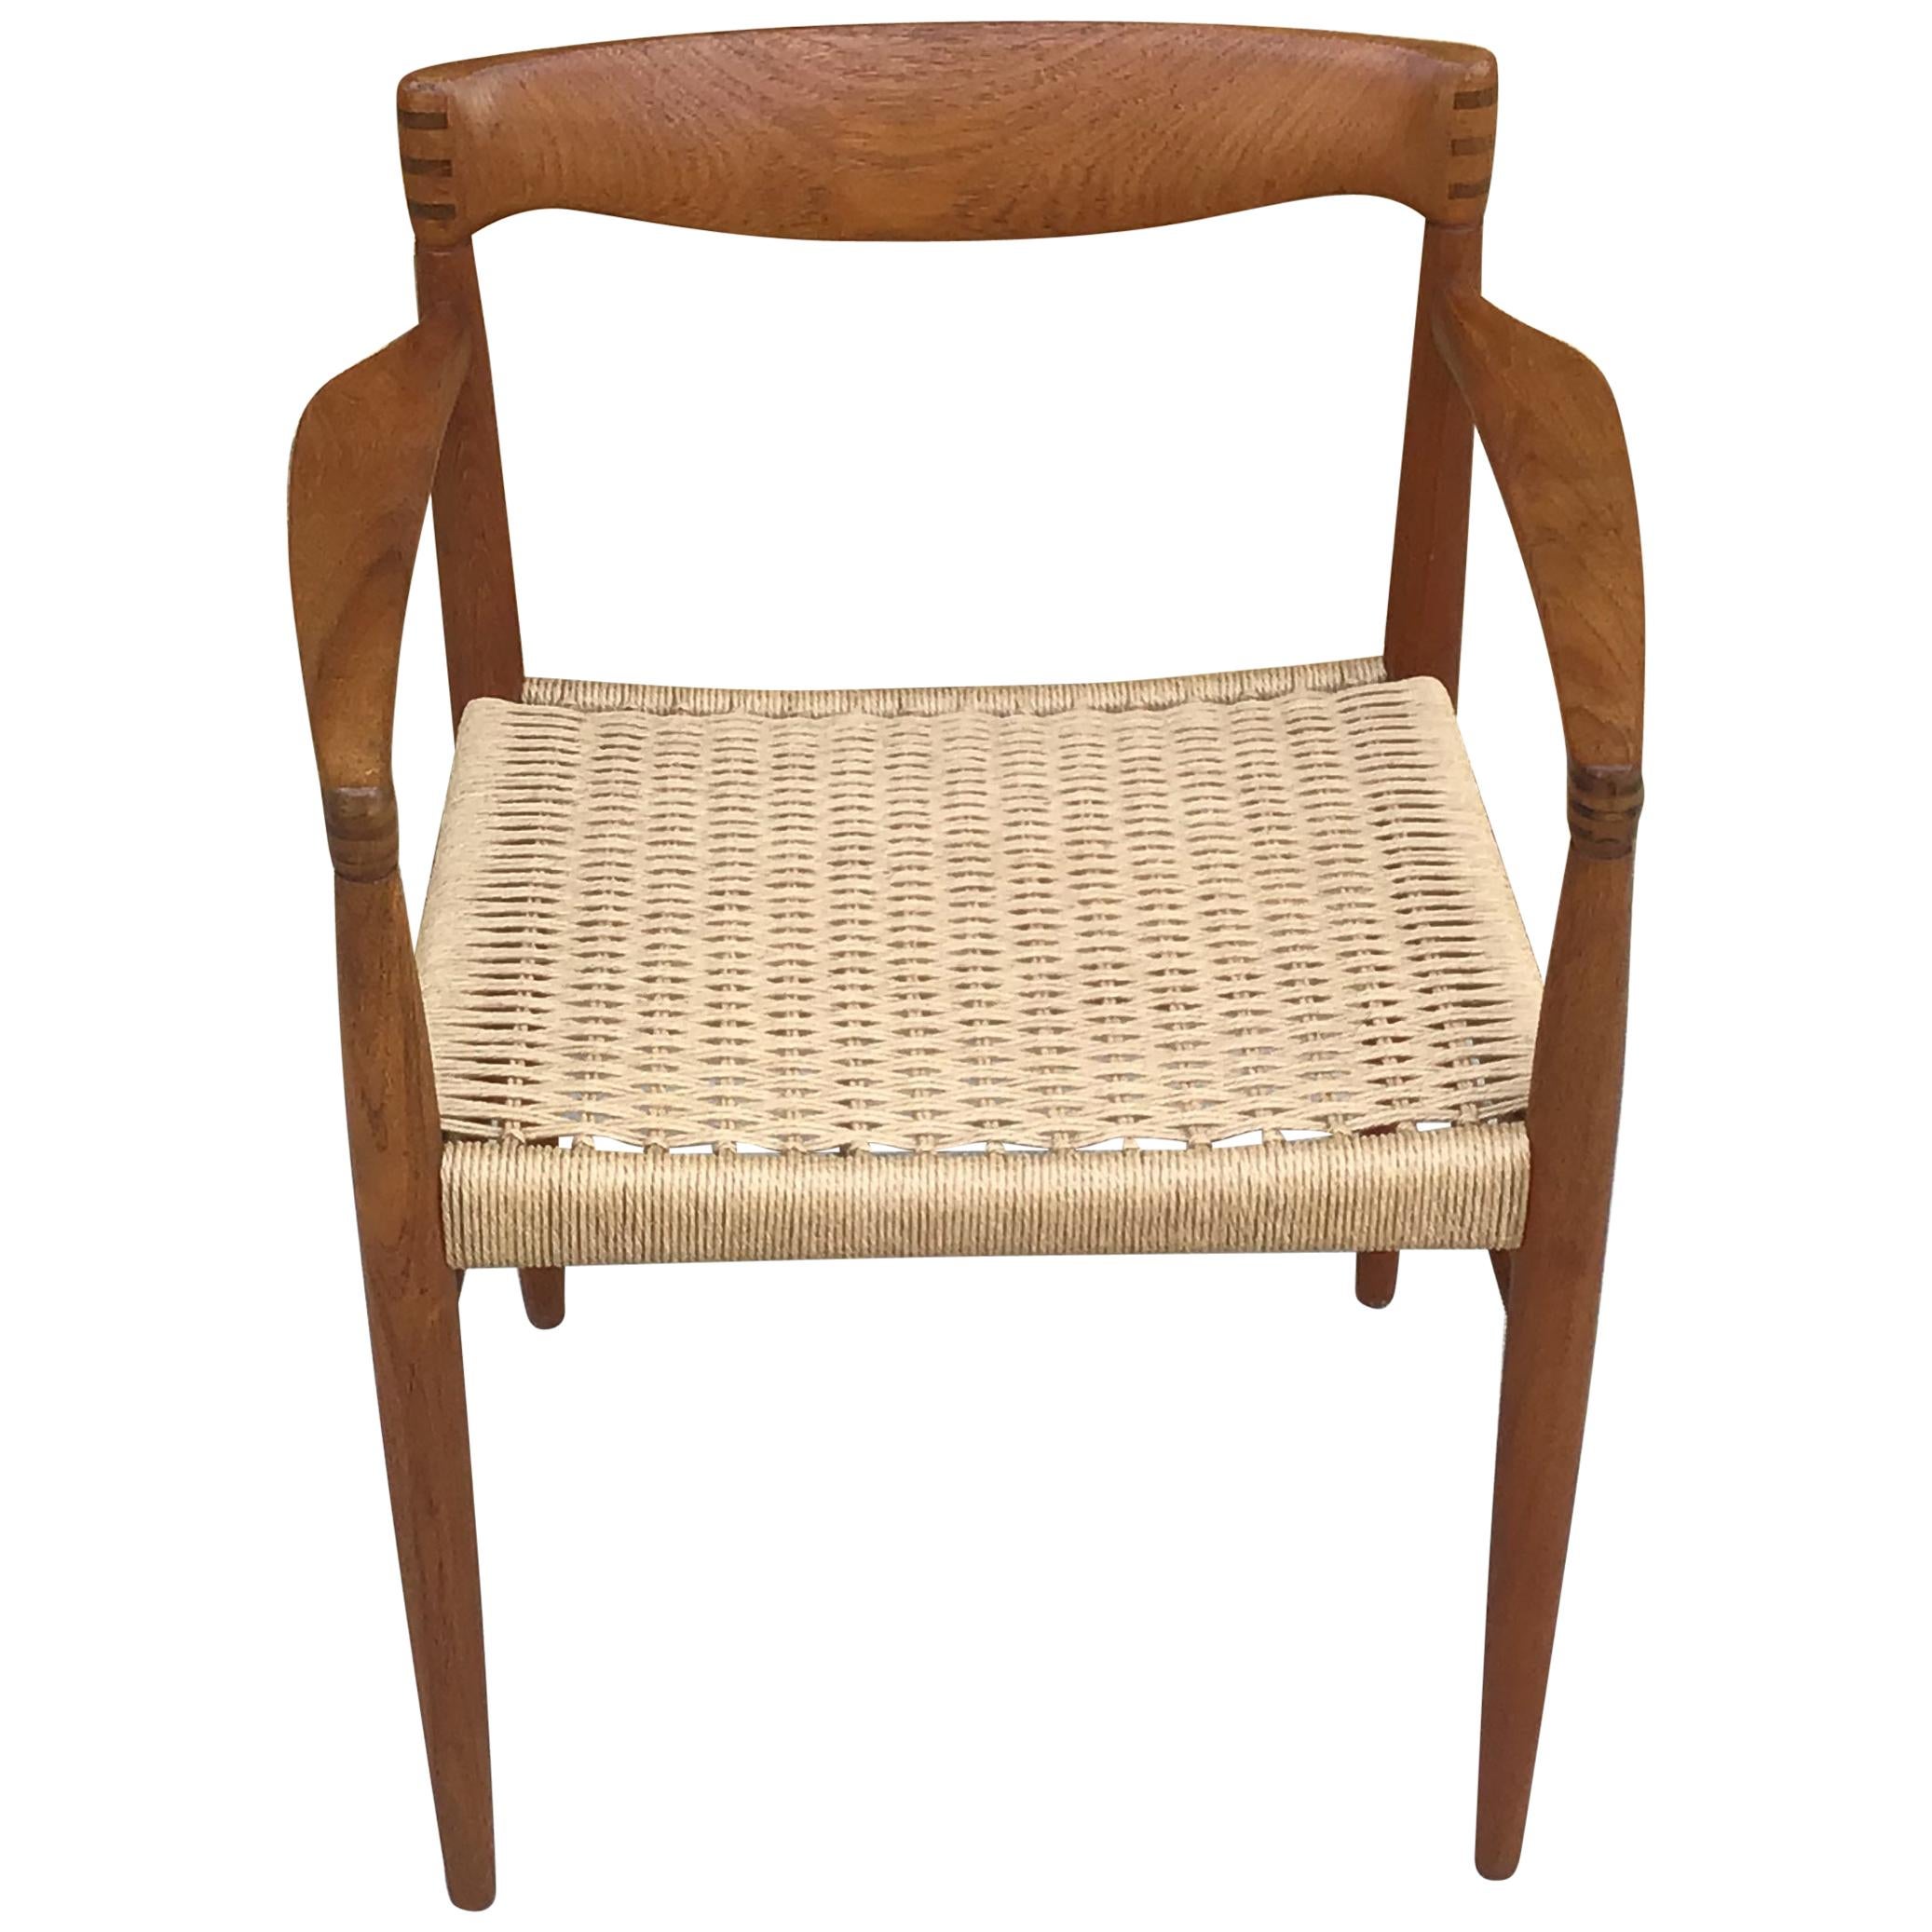 Bramin Danish Chair by H.W. Klein